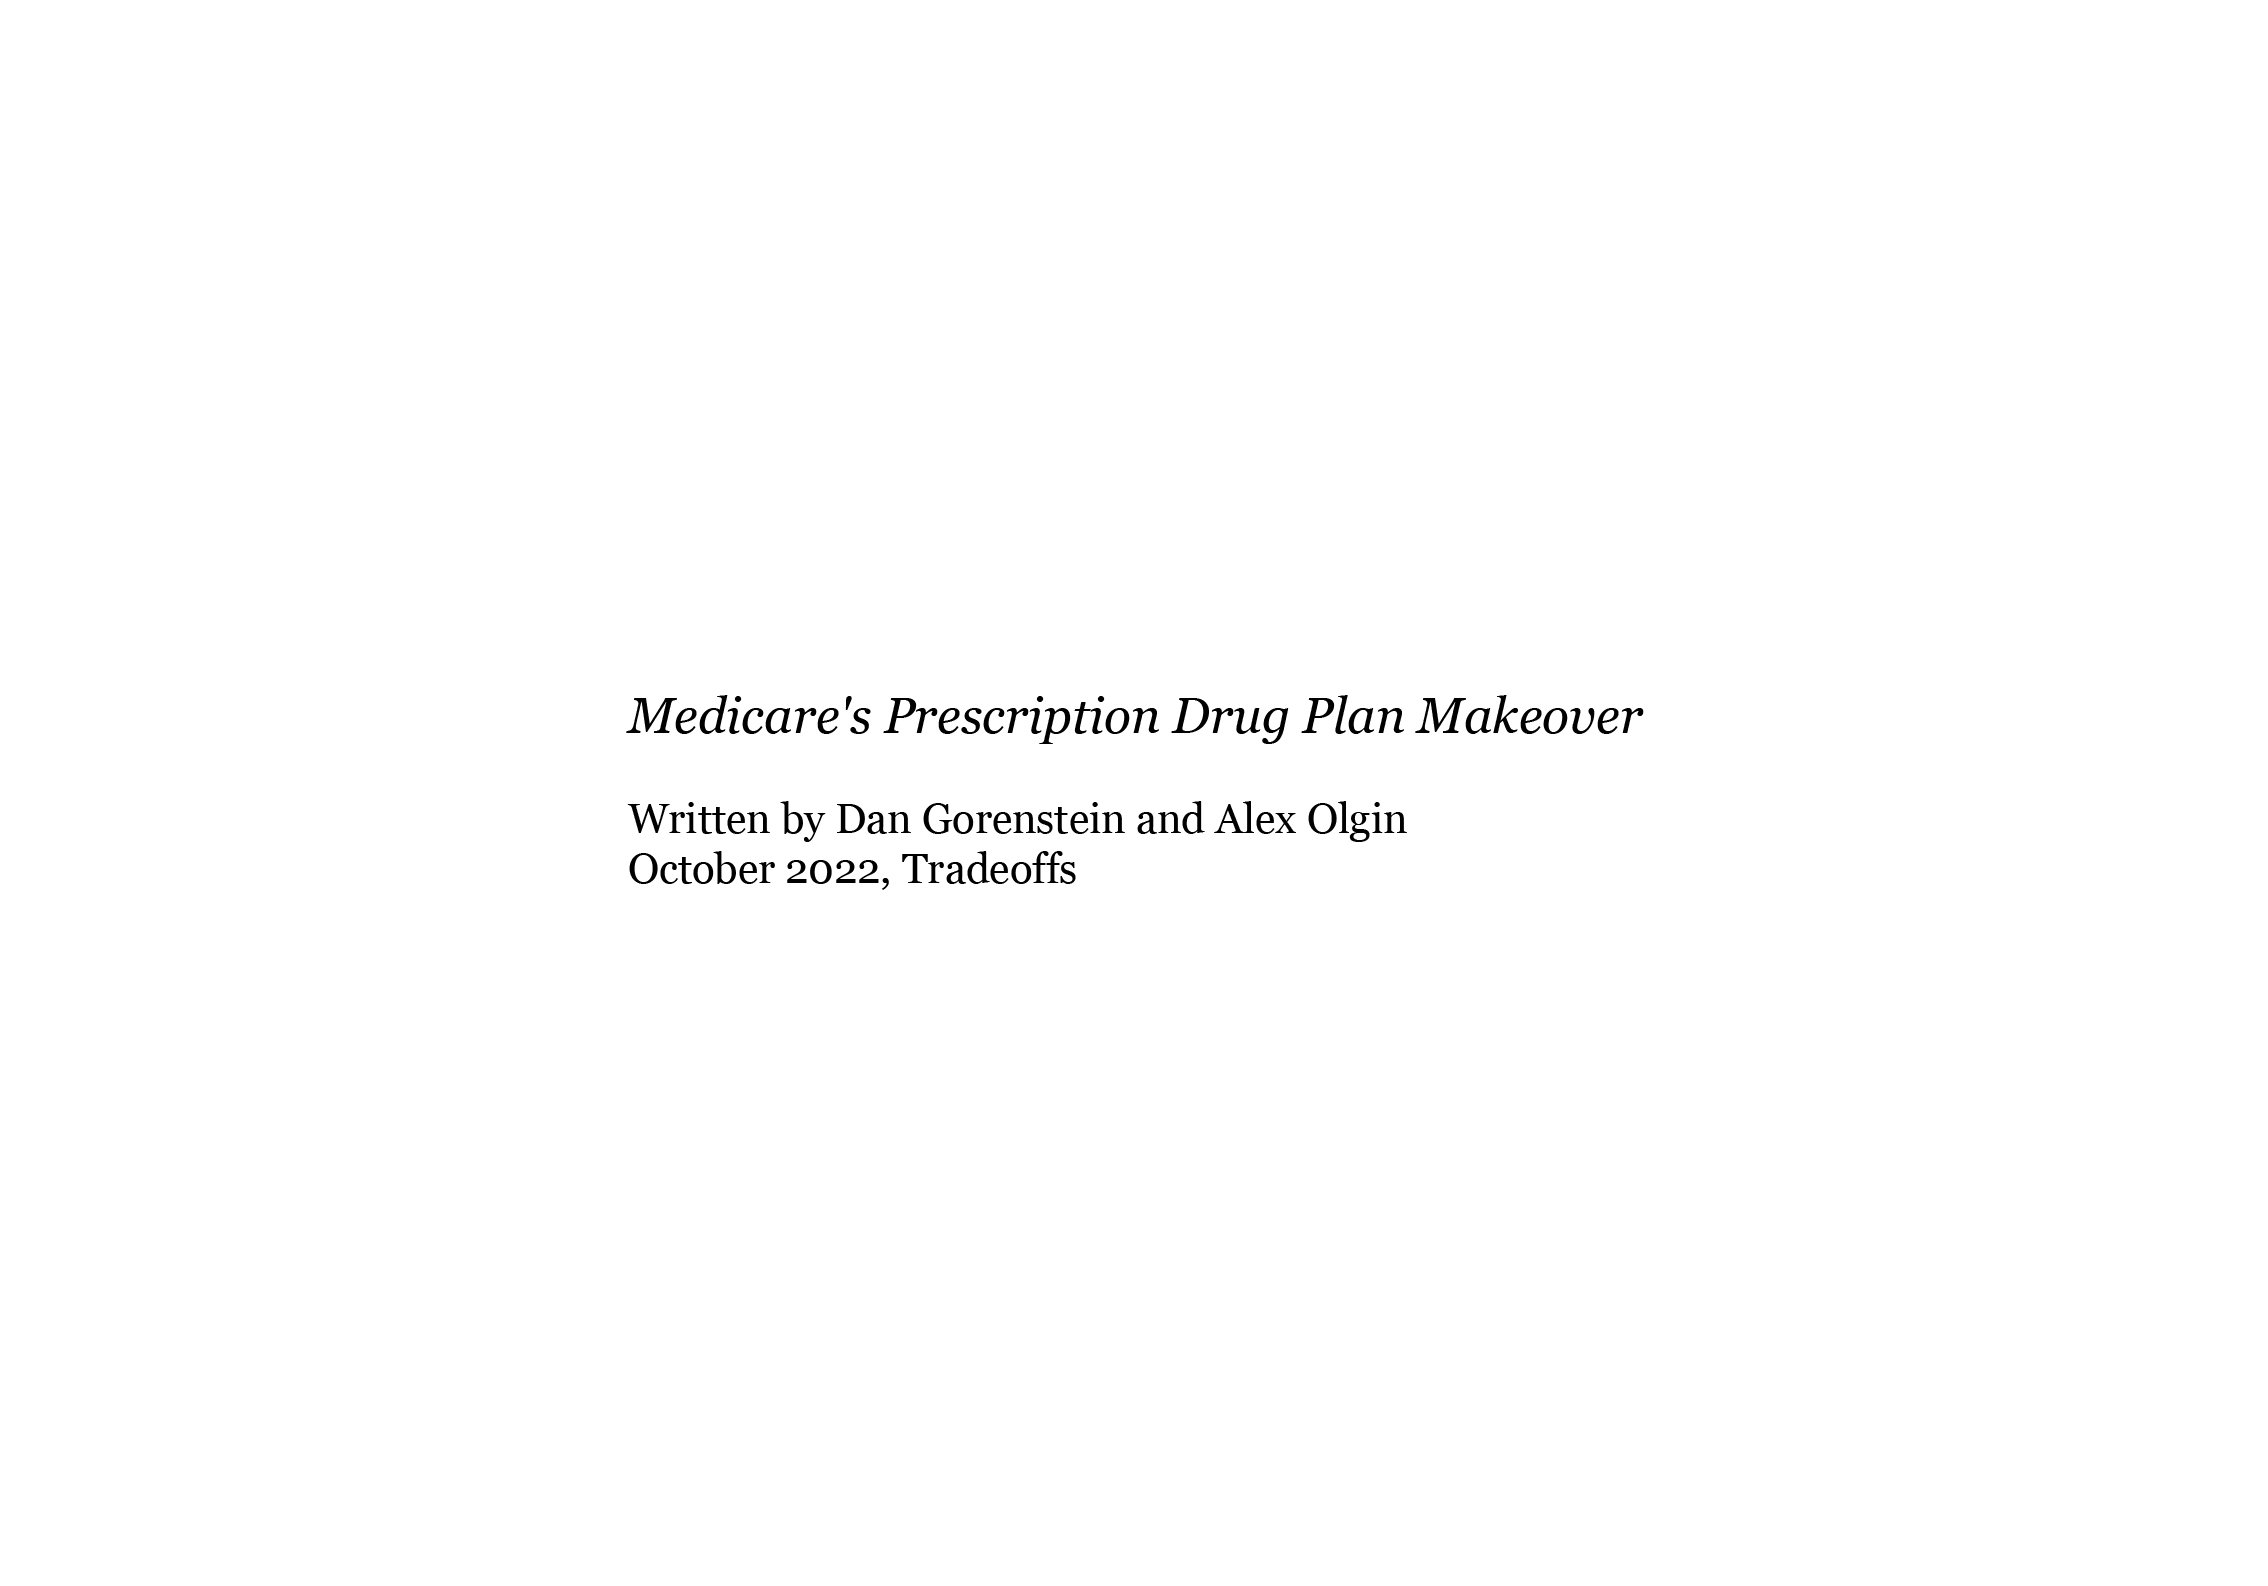  Medicare's Prescription Drug Plan Makeover  Tradeoffs and Public Radio/Media, 2022  